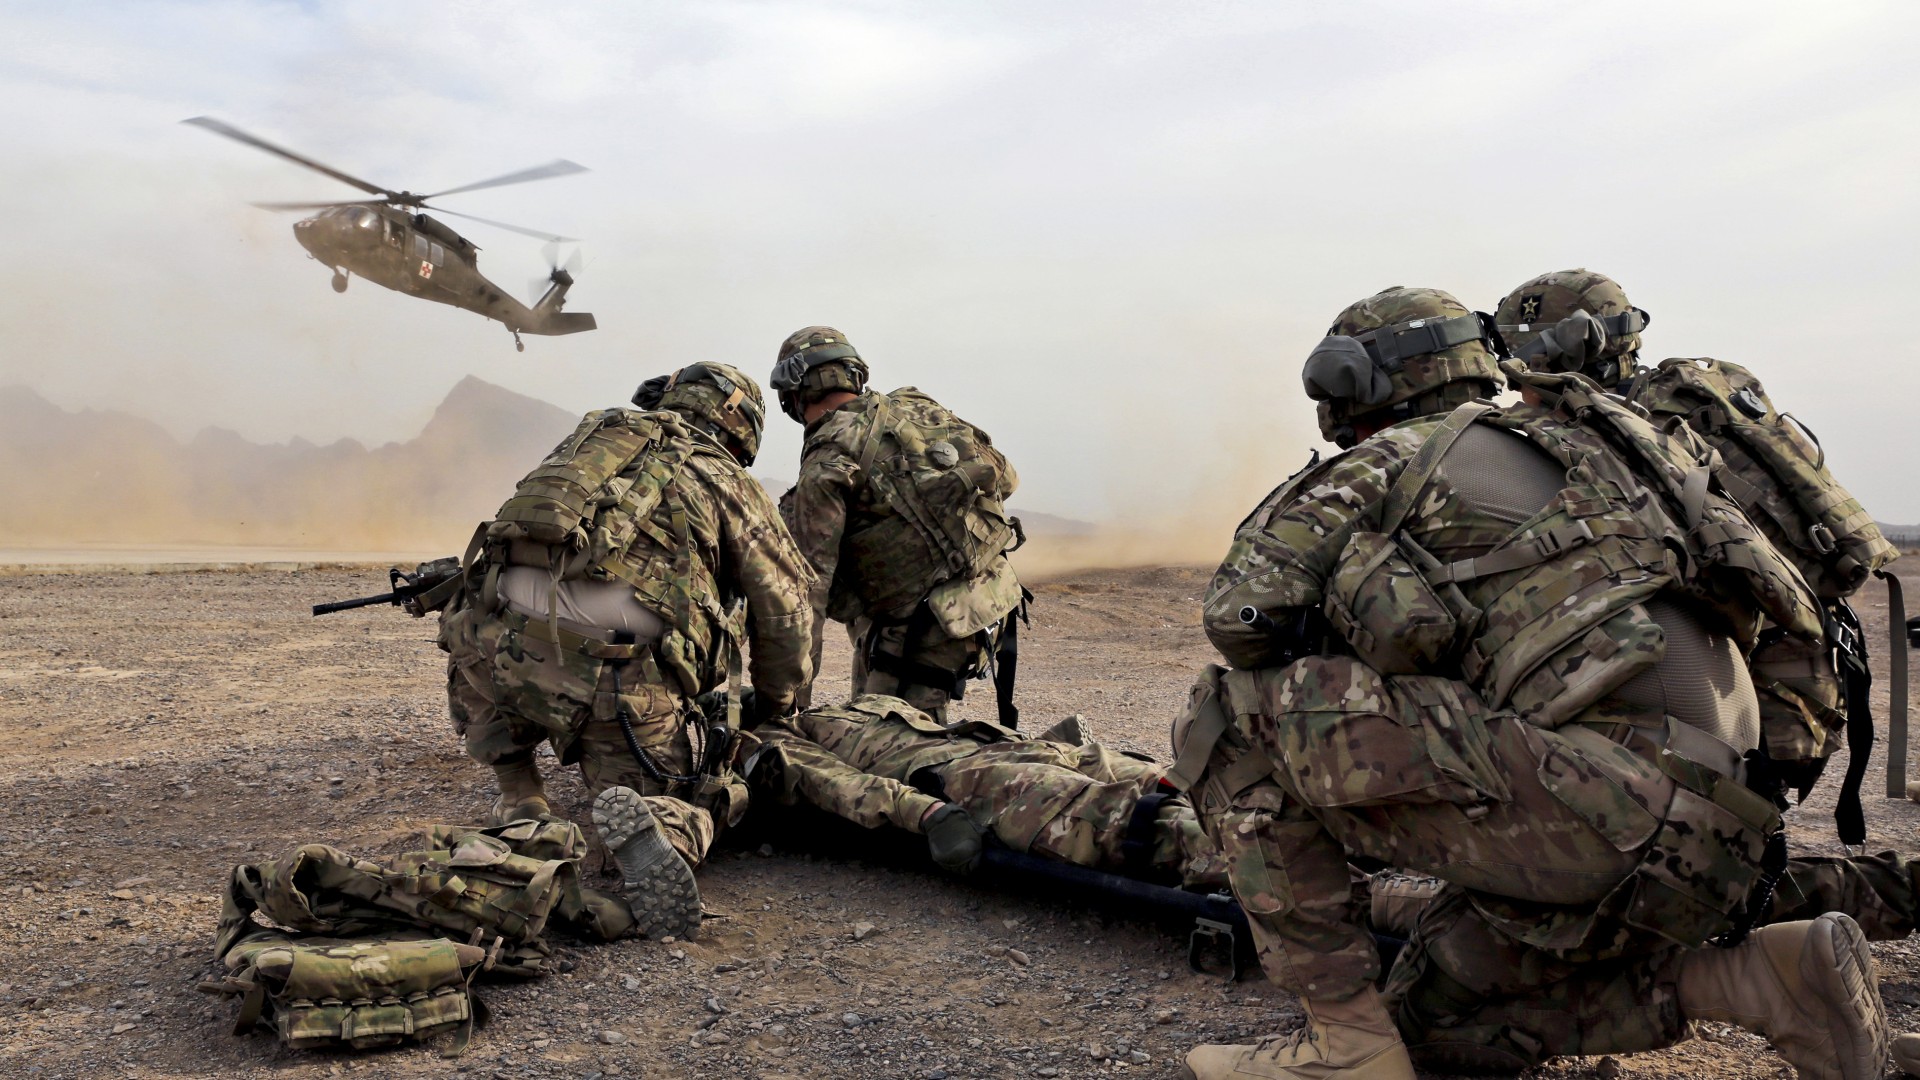 солдат, спасательная операция, вертолет, soldier, rescue mission, helicopter, uniform, desert (horizontal)